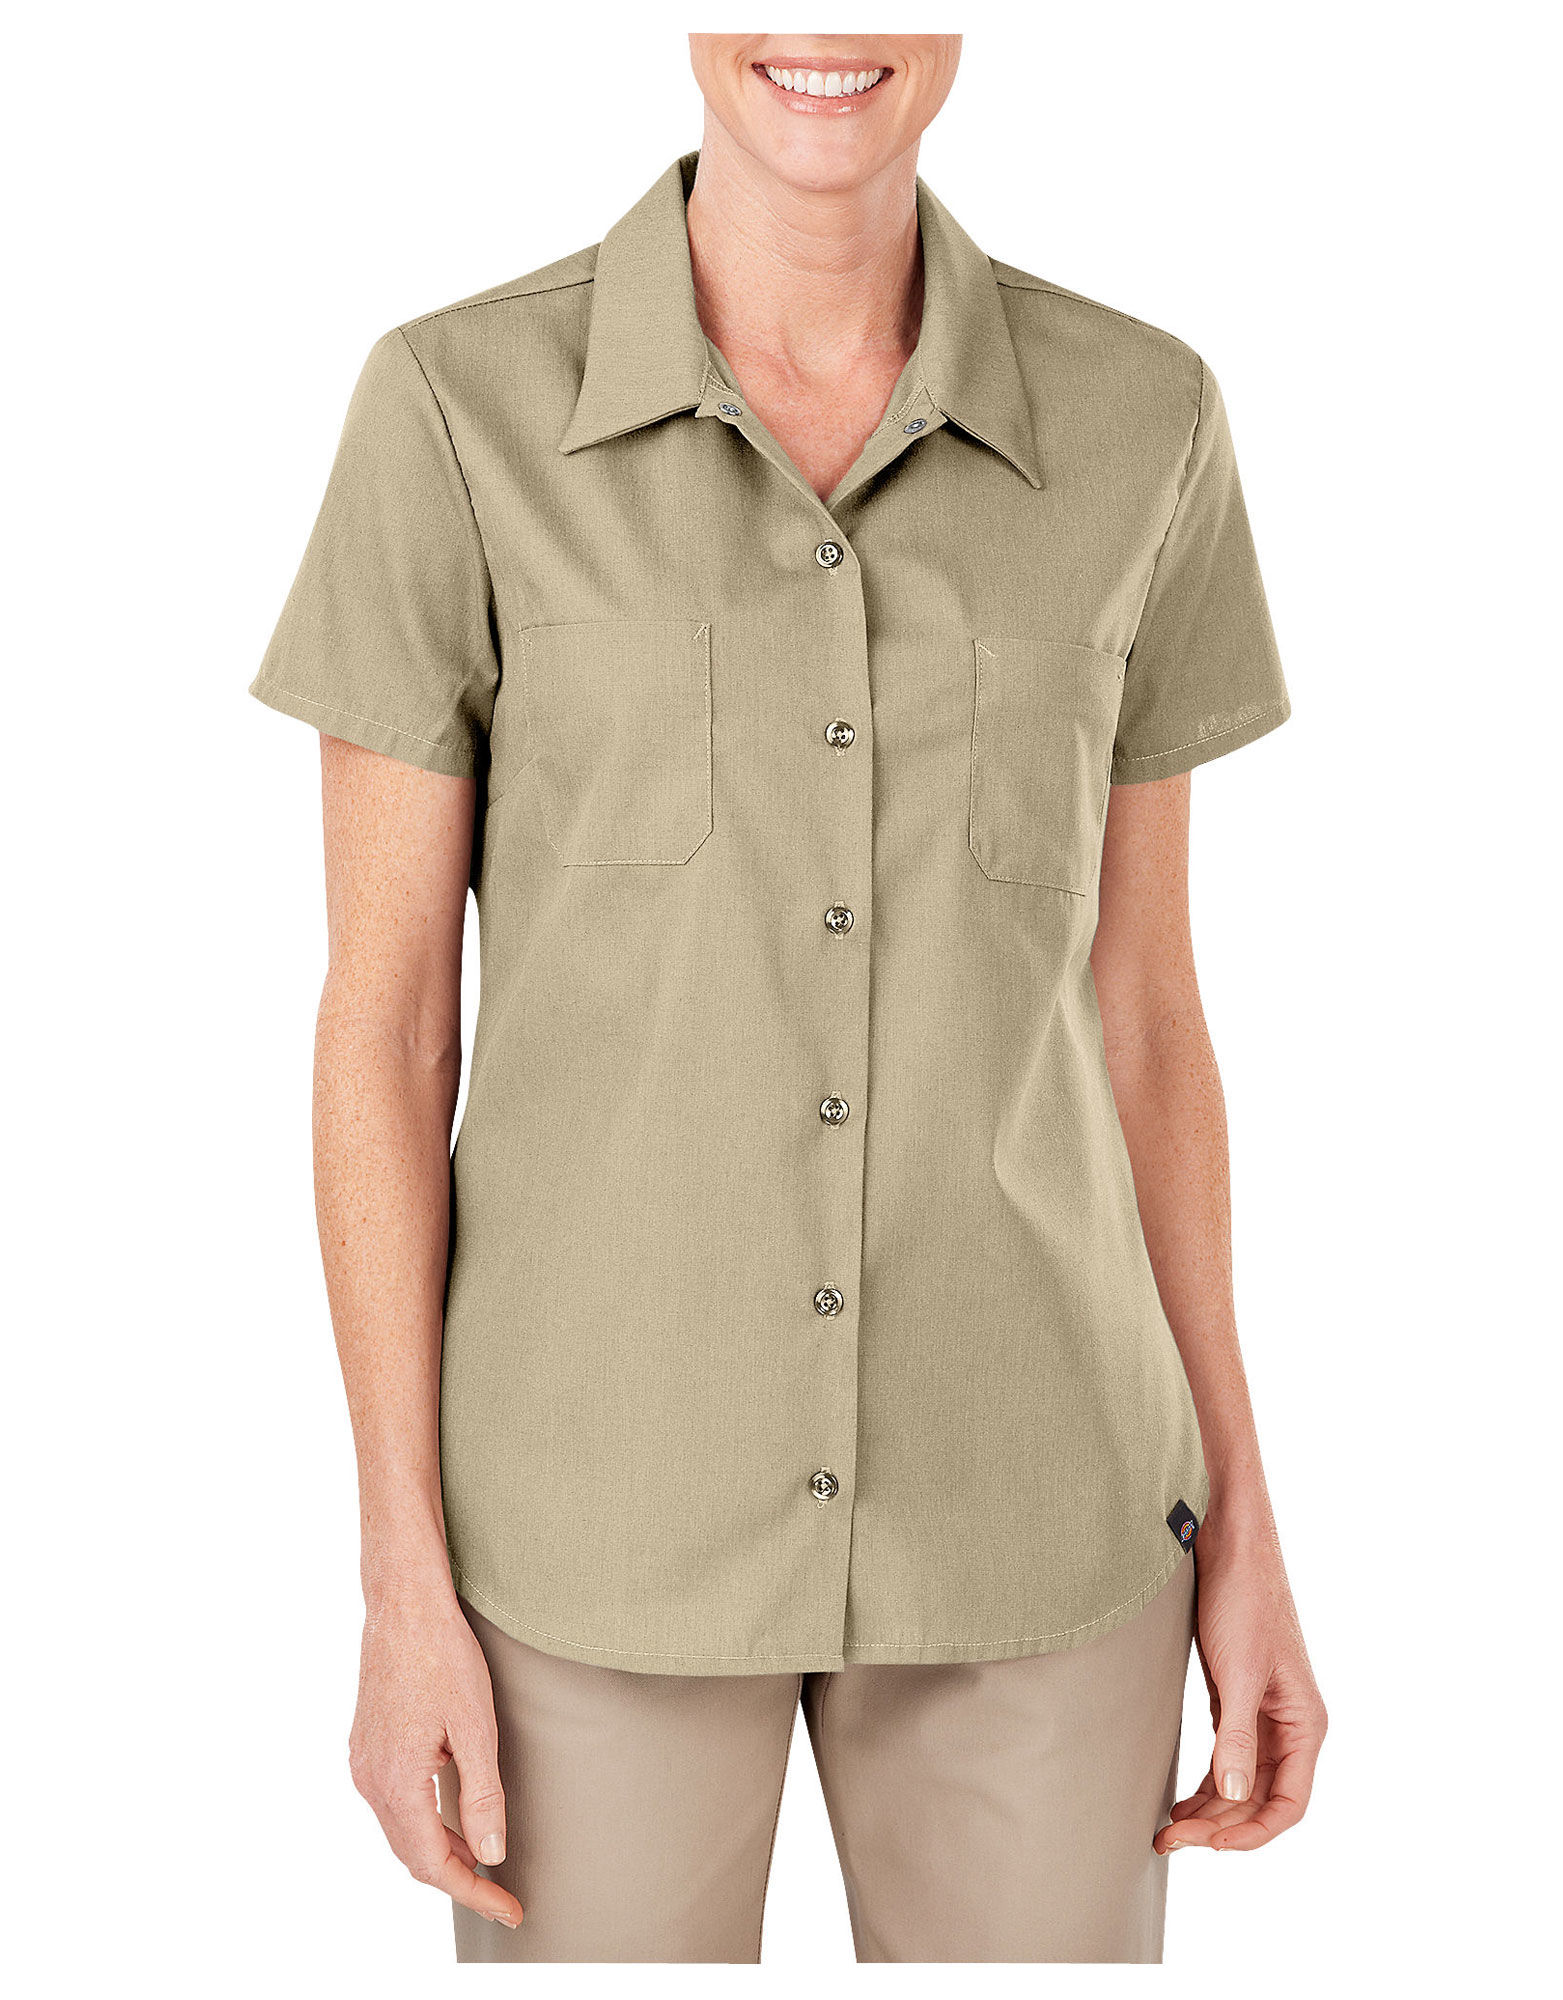 leer onderwerp Besluit Dickies Women's Industrial Short Sleeve Work Shirt - Siegel's Uniform